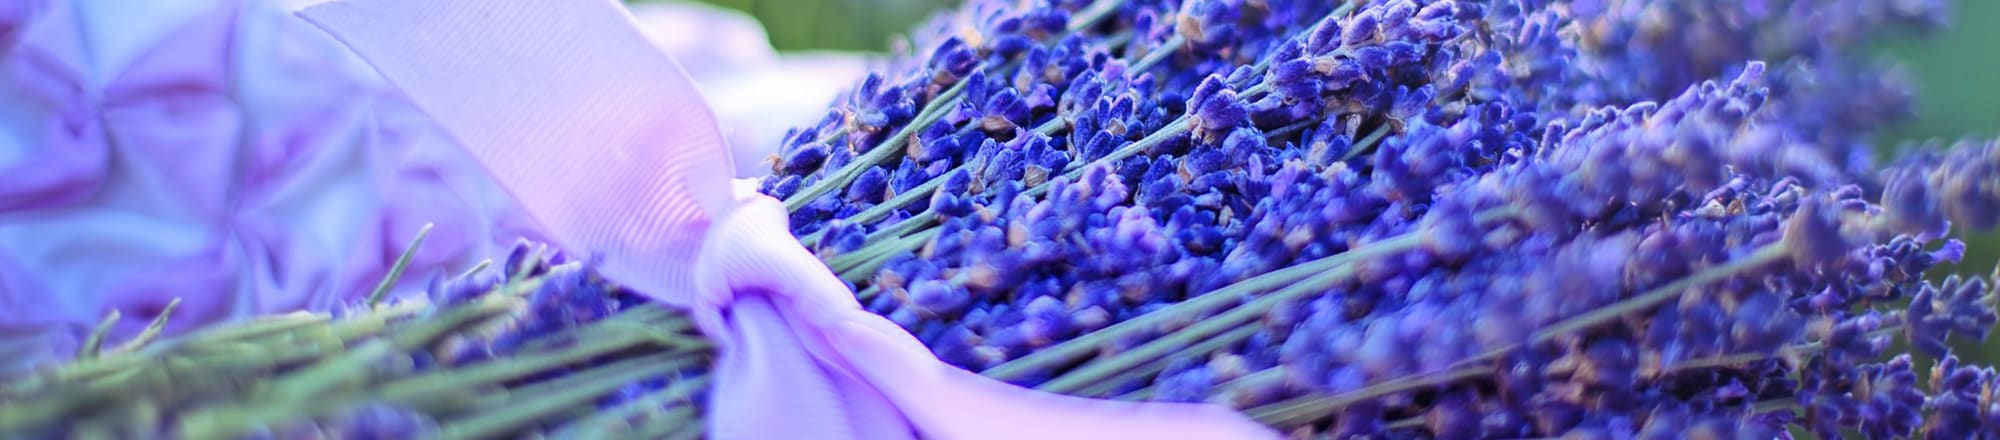 Hortensien & Lavendel – absolut trendy